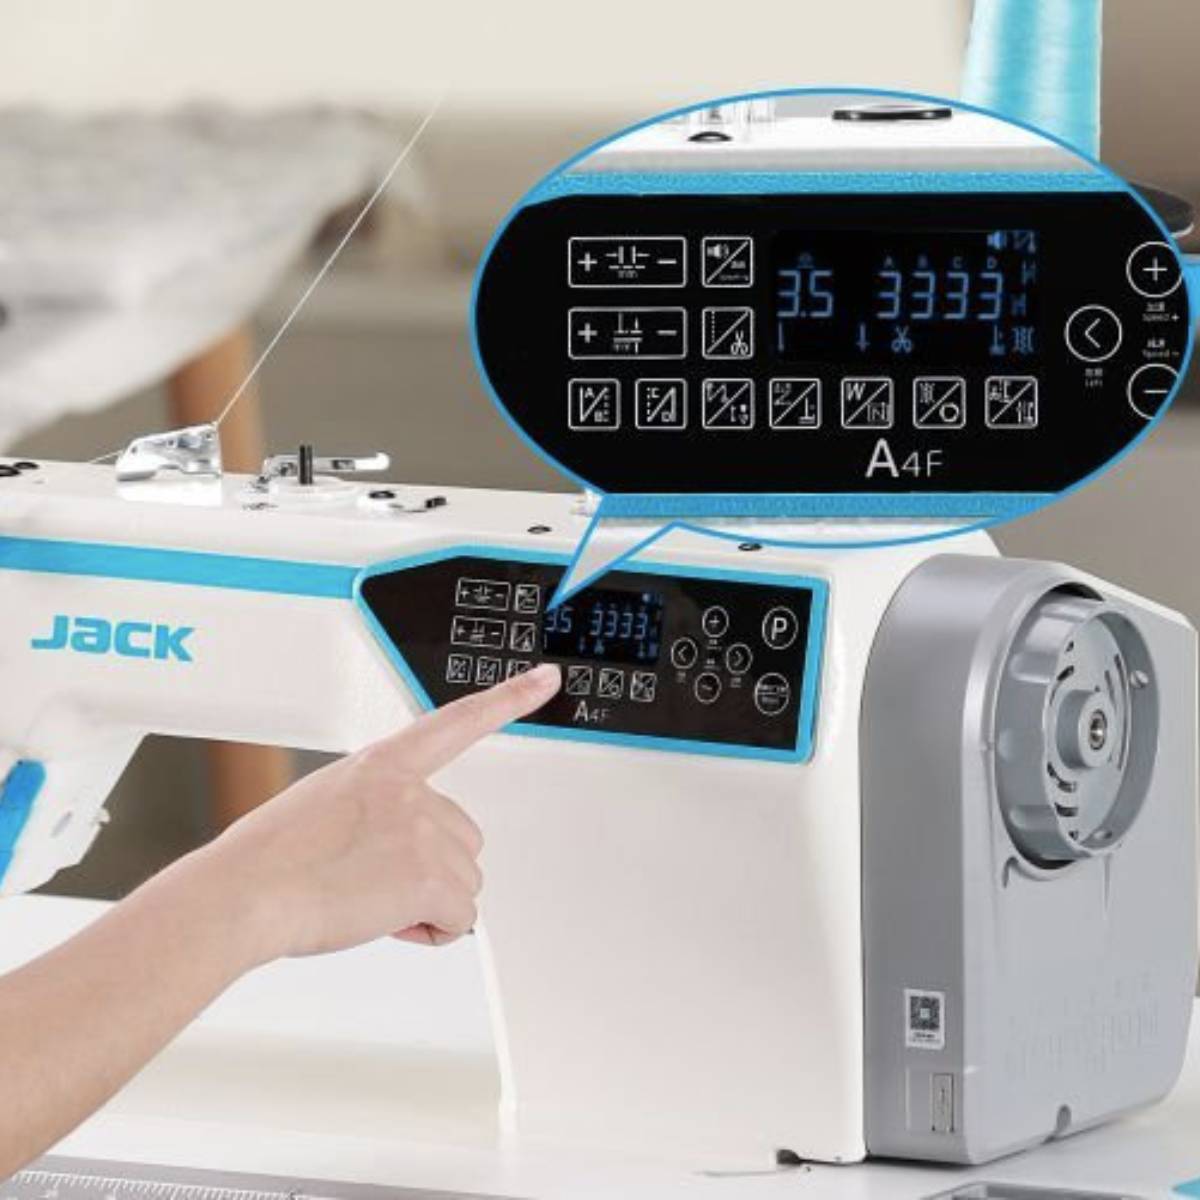 Plana Electrónica Jack A4F USB